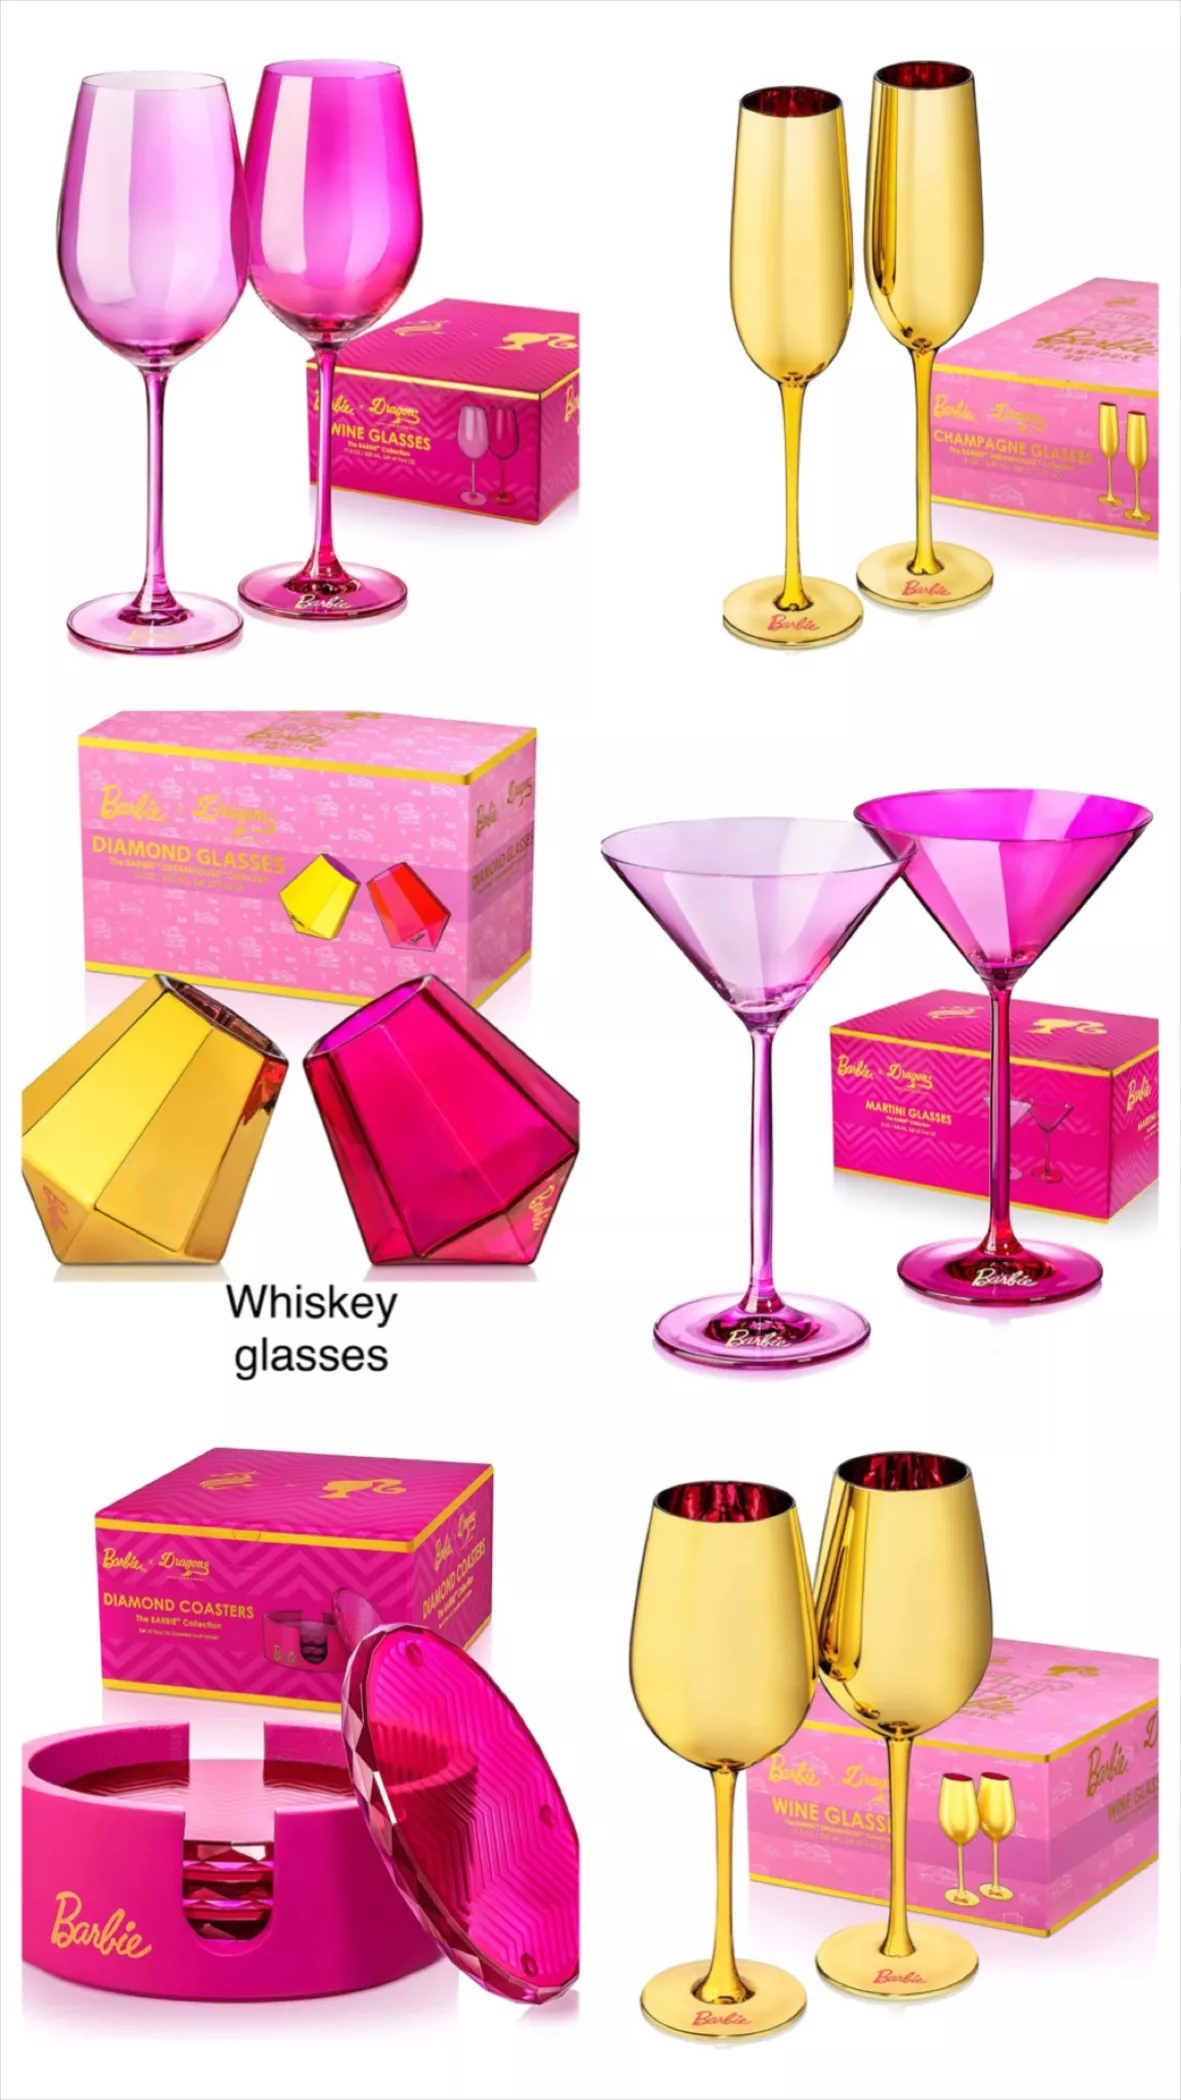 Barbie x Dragon Glassware Drinking Glasses